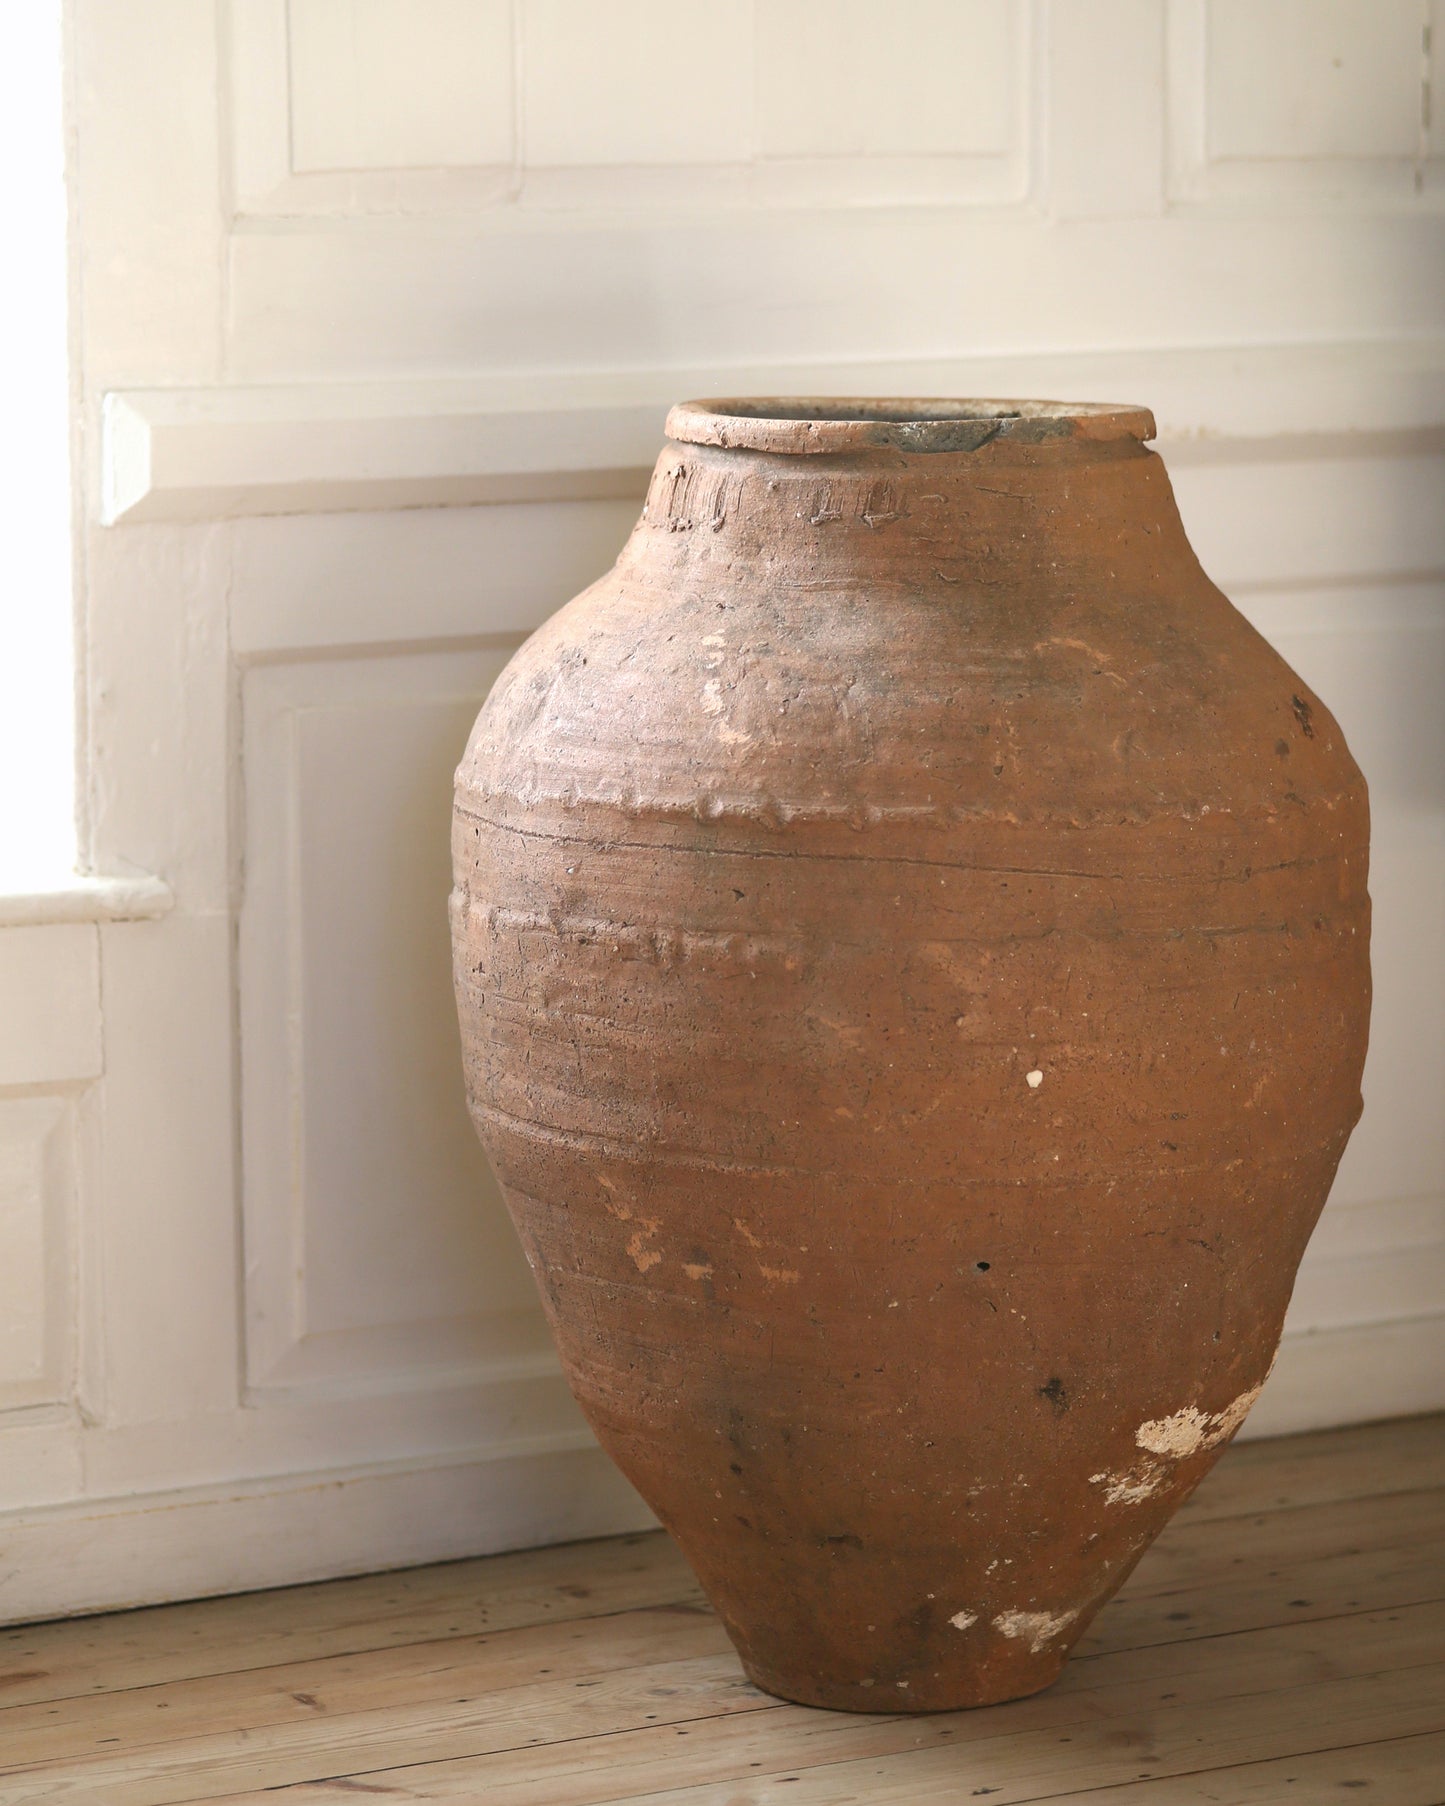 Side of pot showing original texture and patina